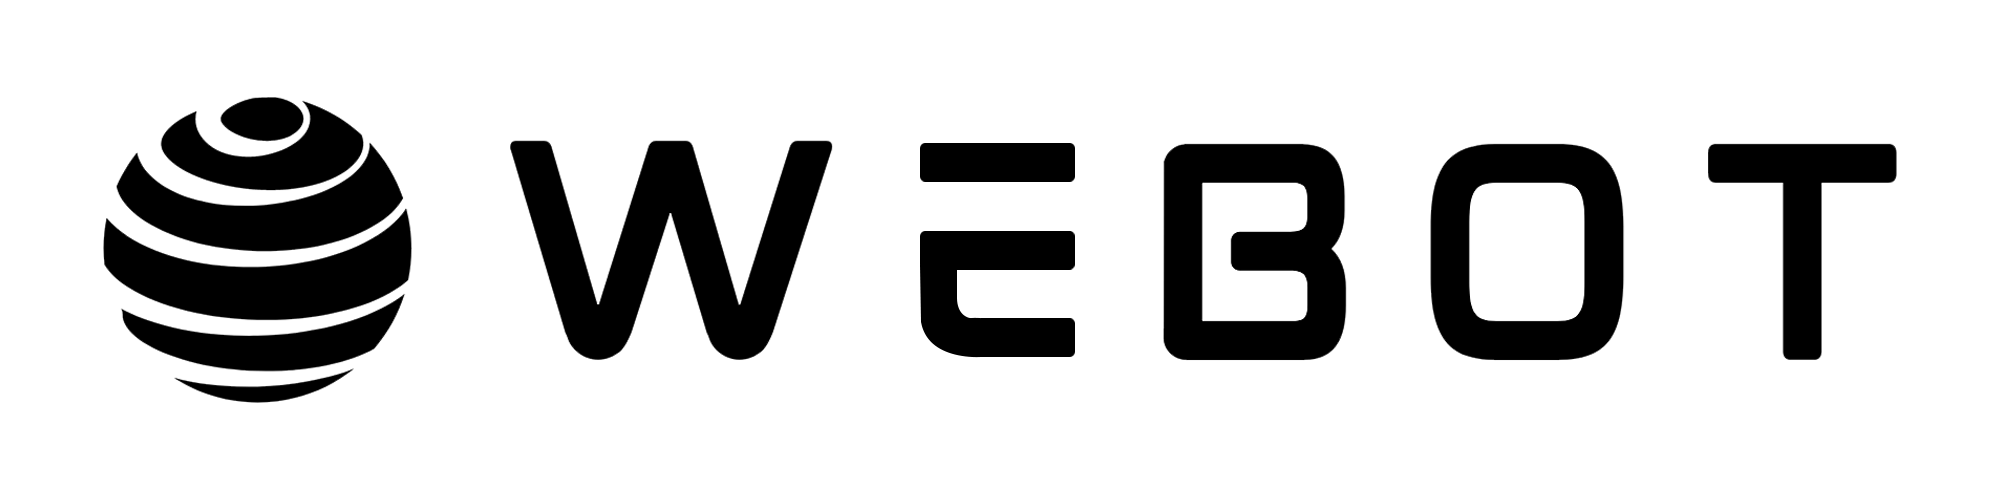 Webot-logo_black